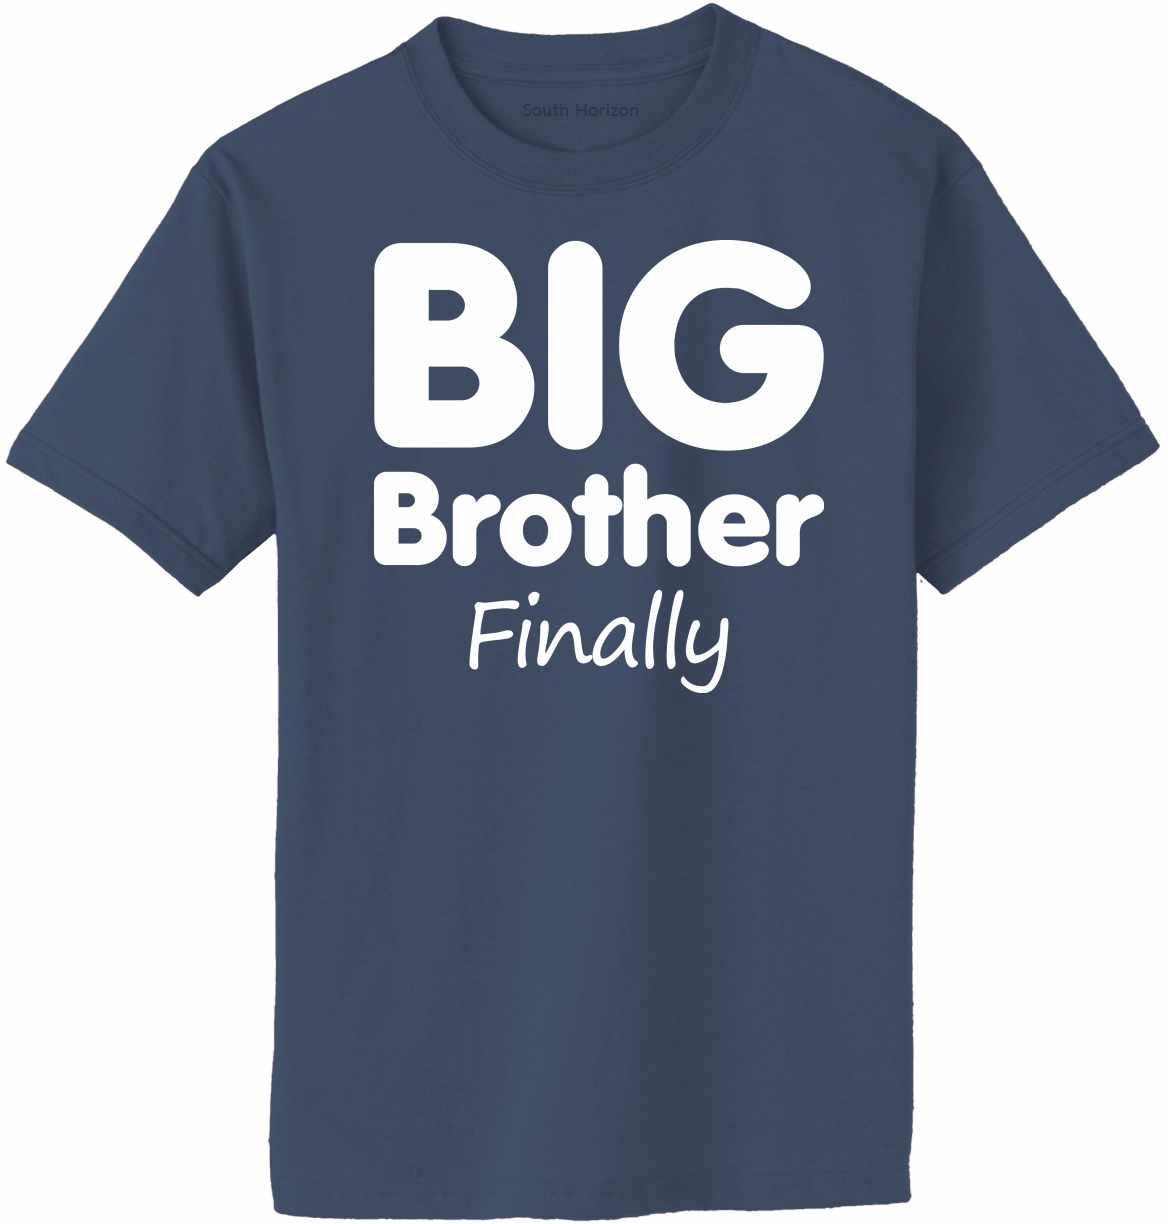 Big Brother Finally Adult T-Shirt (#962-1)